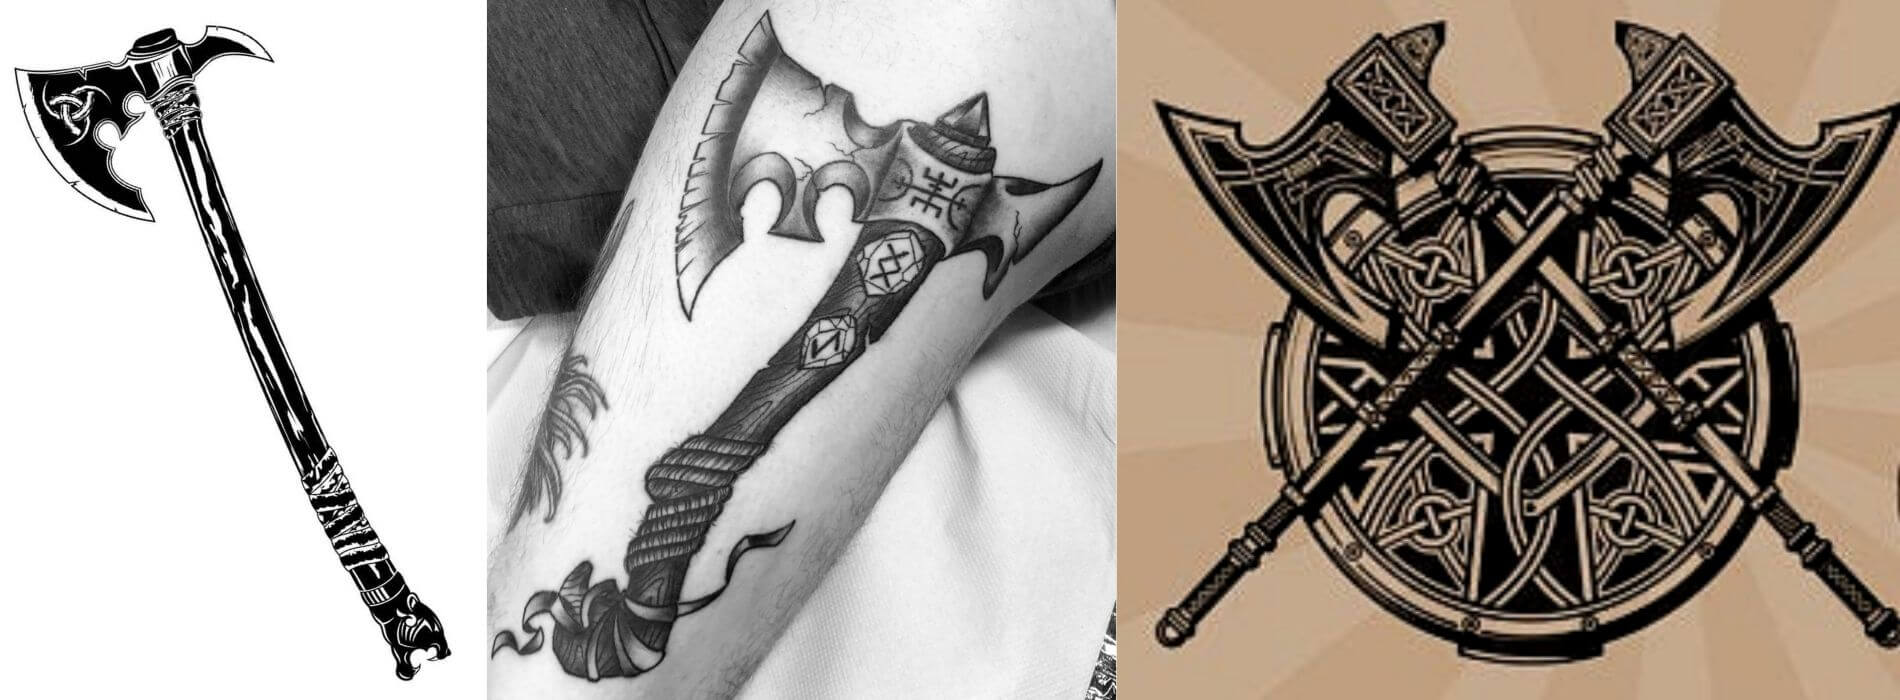 Viking Symbols Meanings Stories Tattoo Idea Viking Store